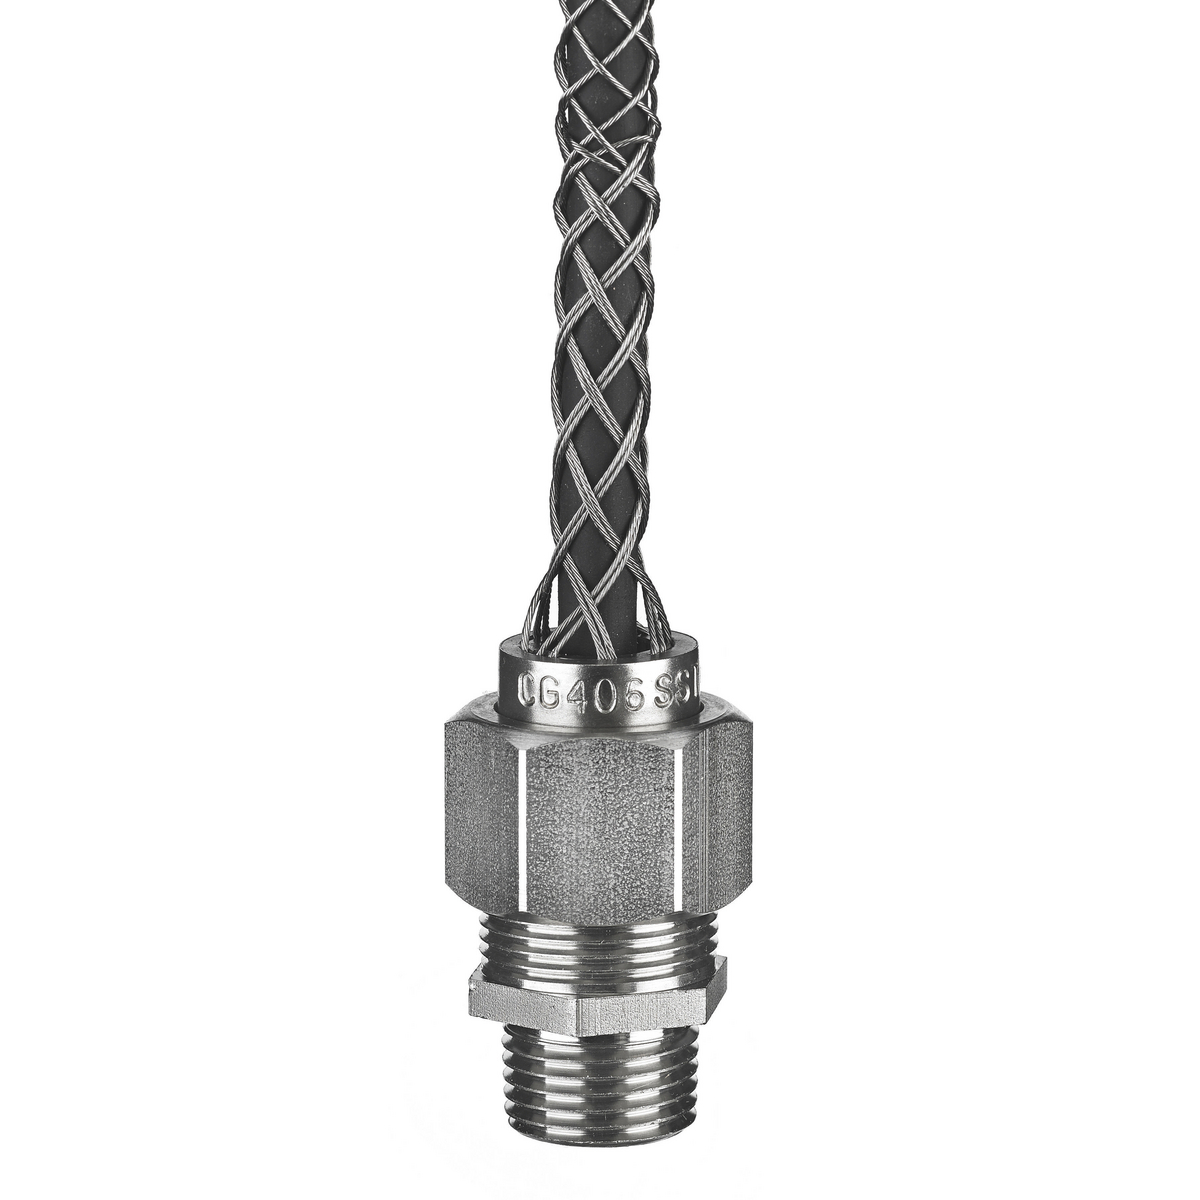 Arlington LPCG507 1/2 Non-Metallic Low-Profile Strain Relief Cord Connector,  .385 - .600 Range, Gray